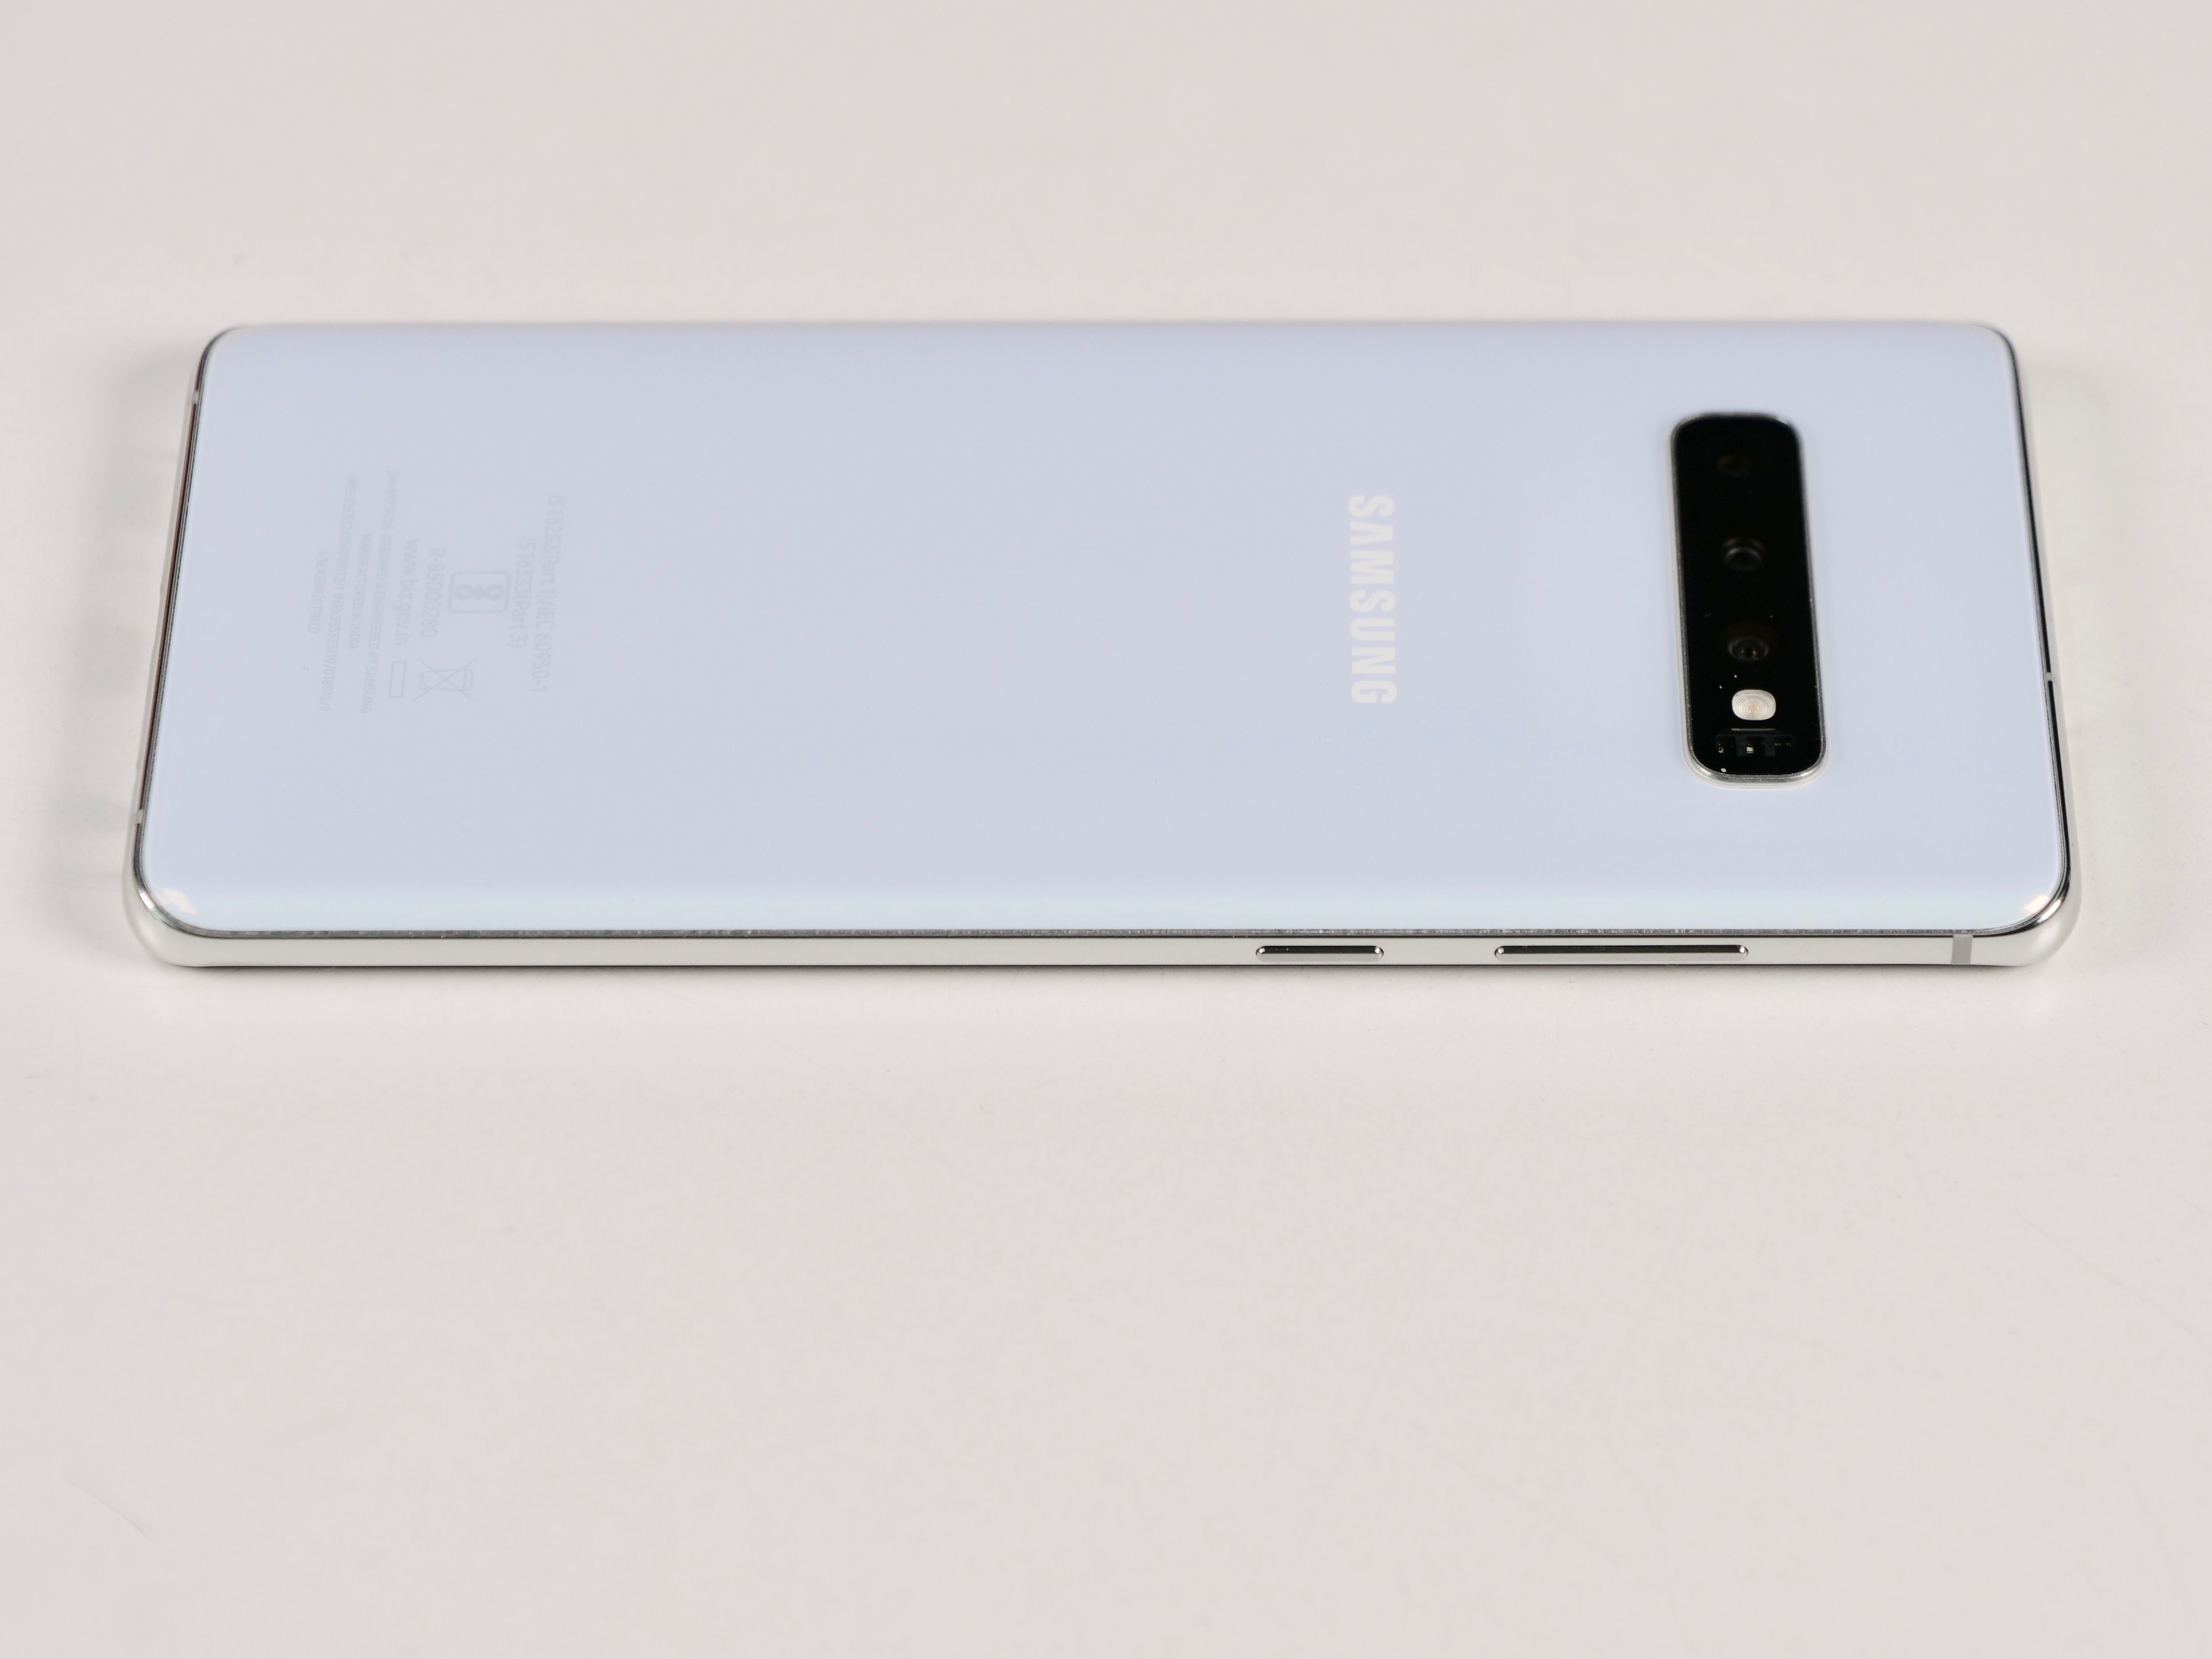 Samsung Galaxy S10 Plus Bixby Key Volume Buttons